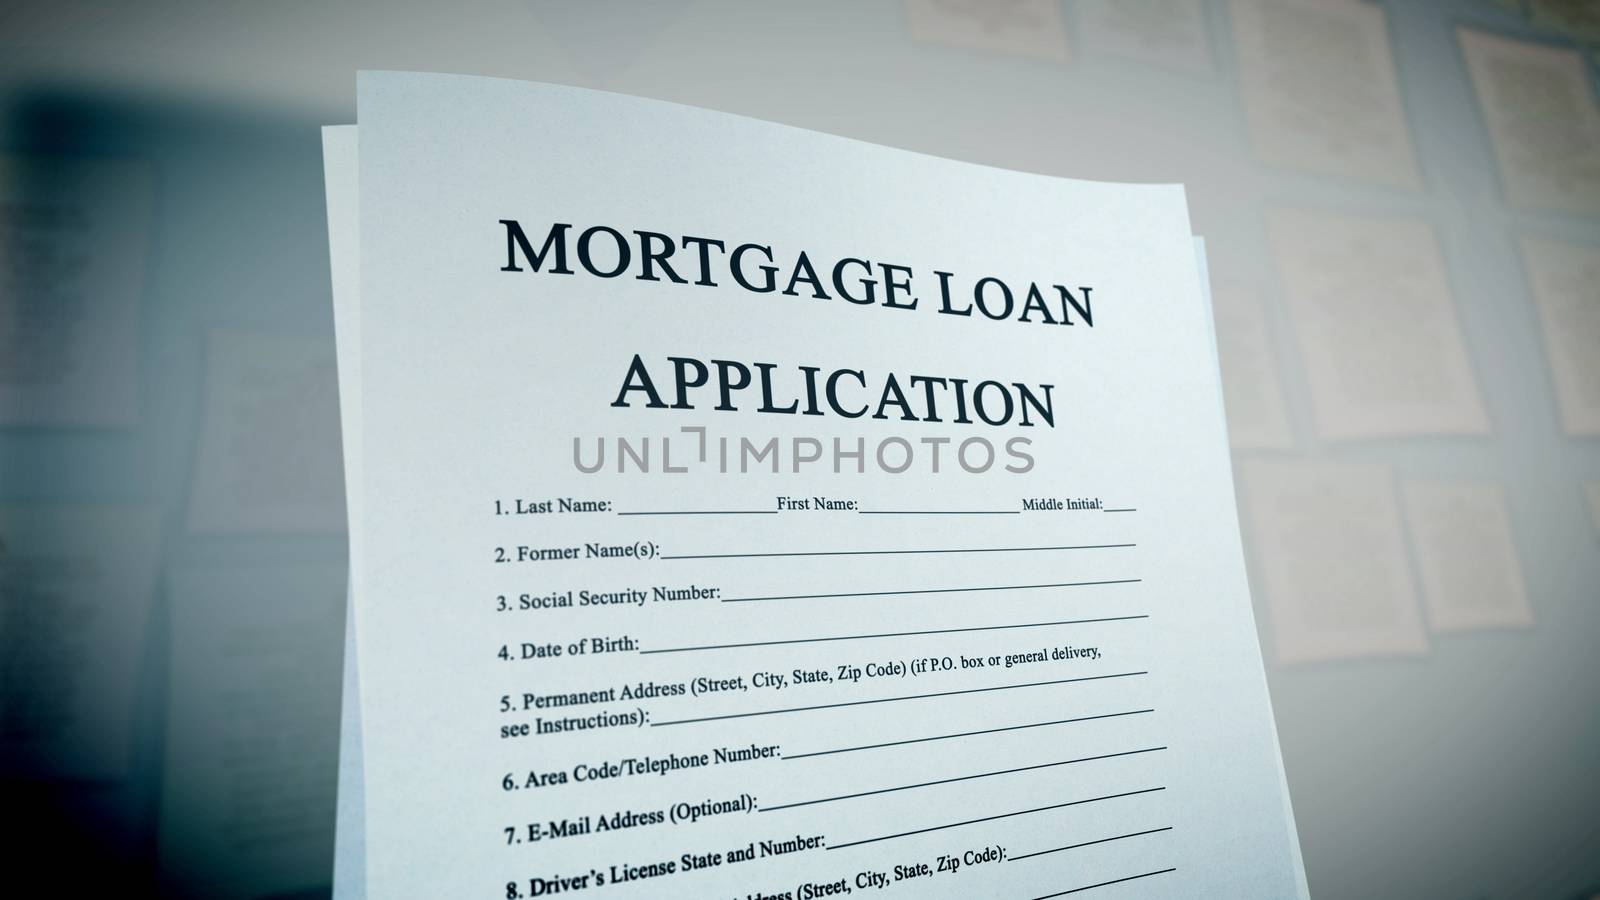 Pop art mortgage loan illustration by klss